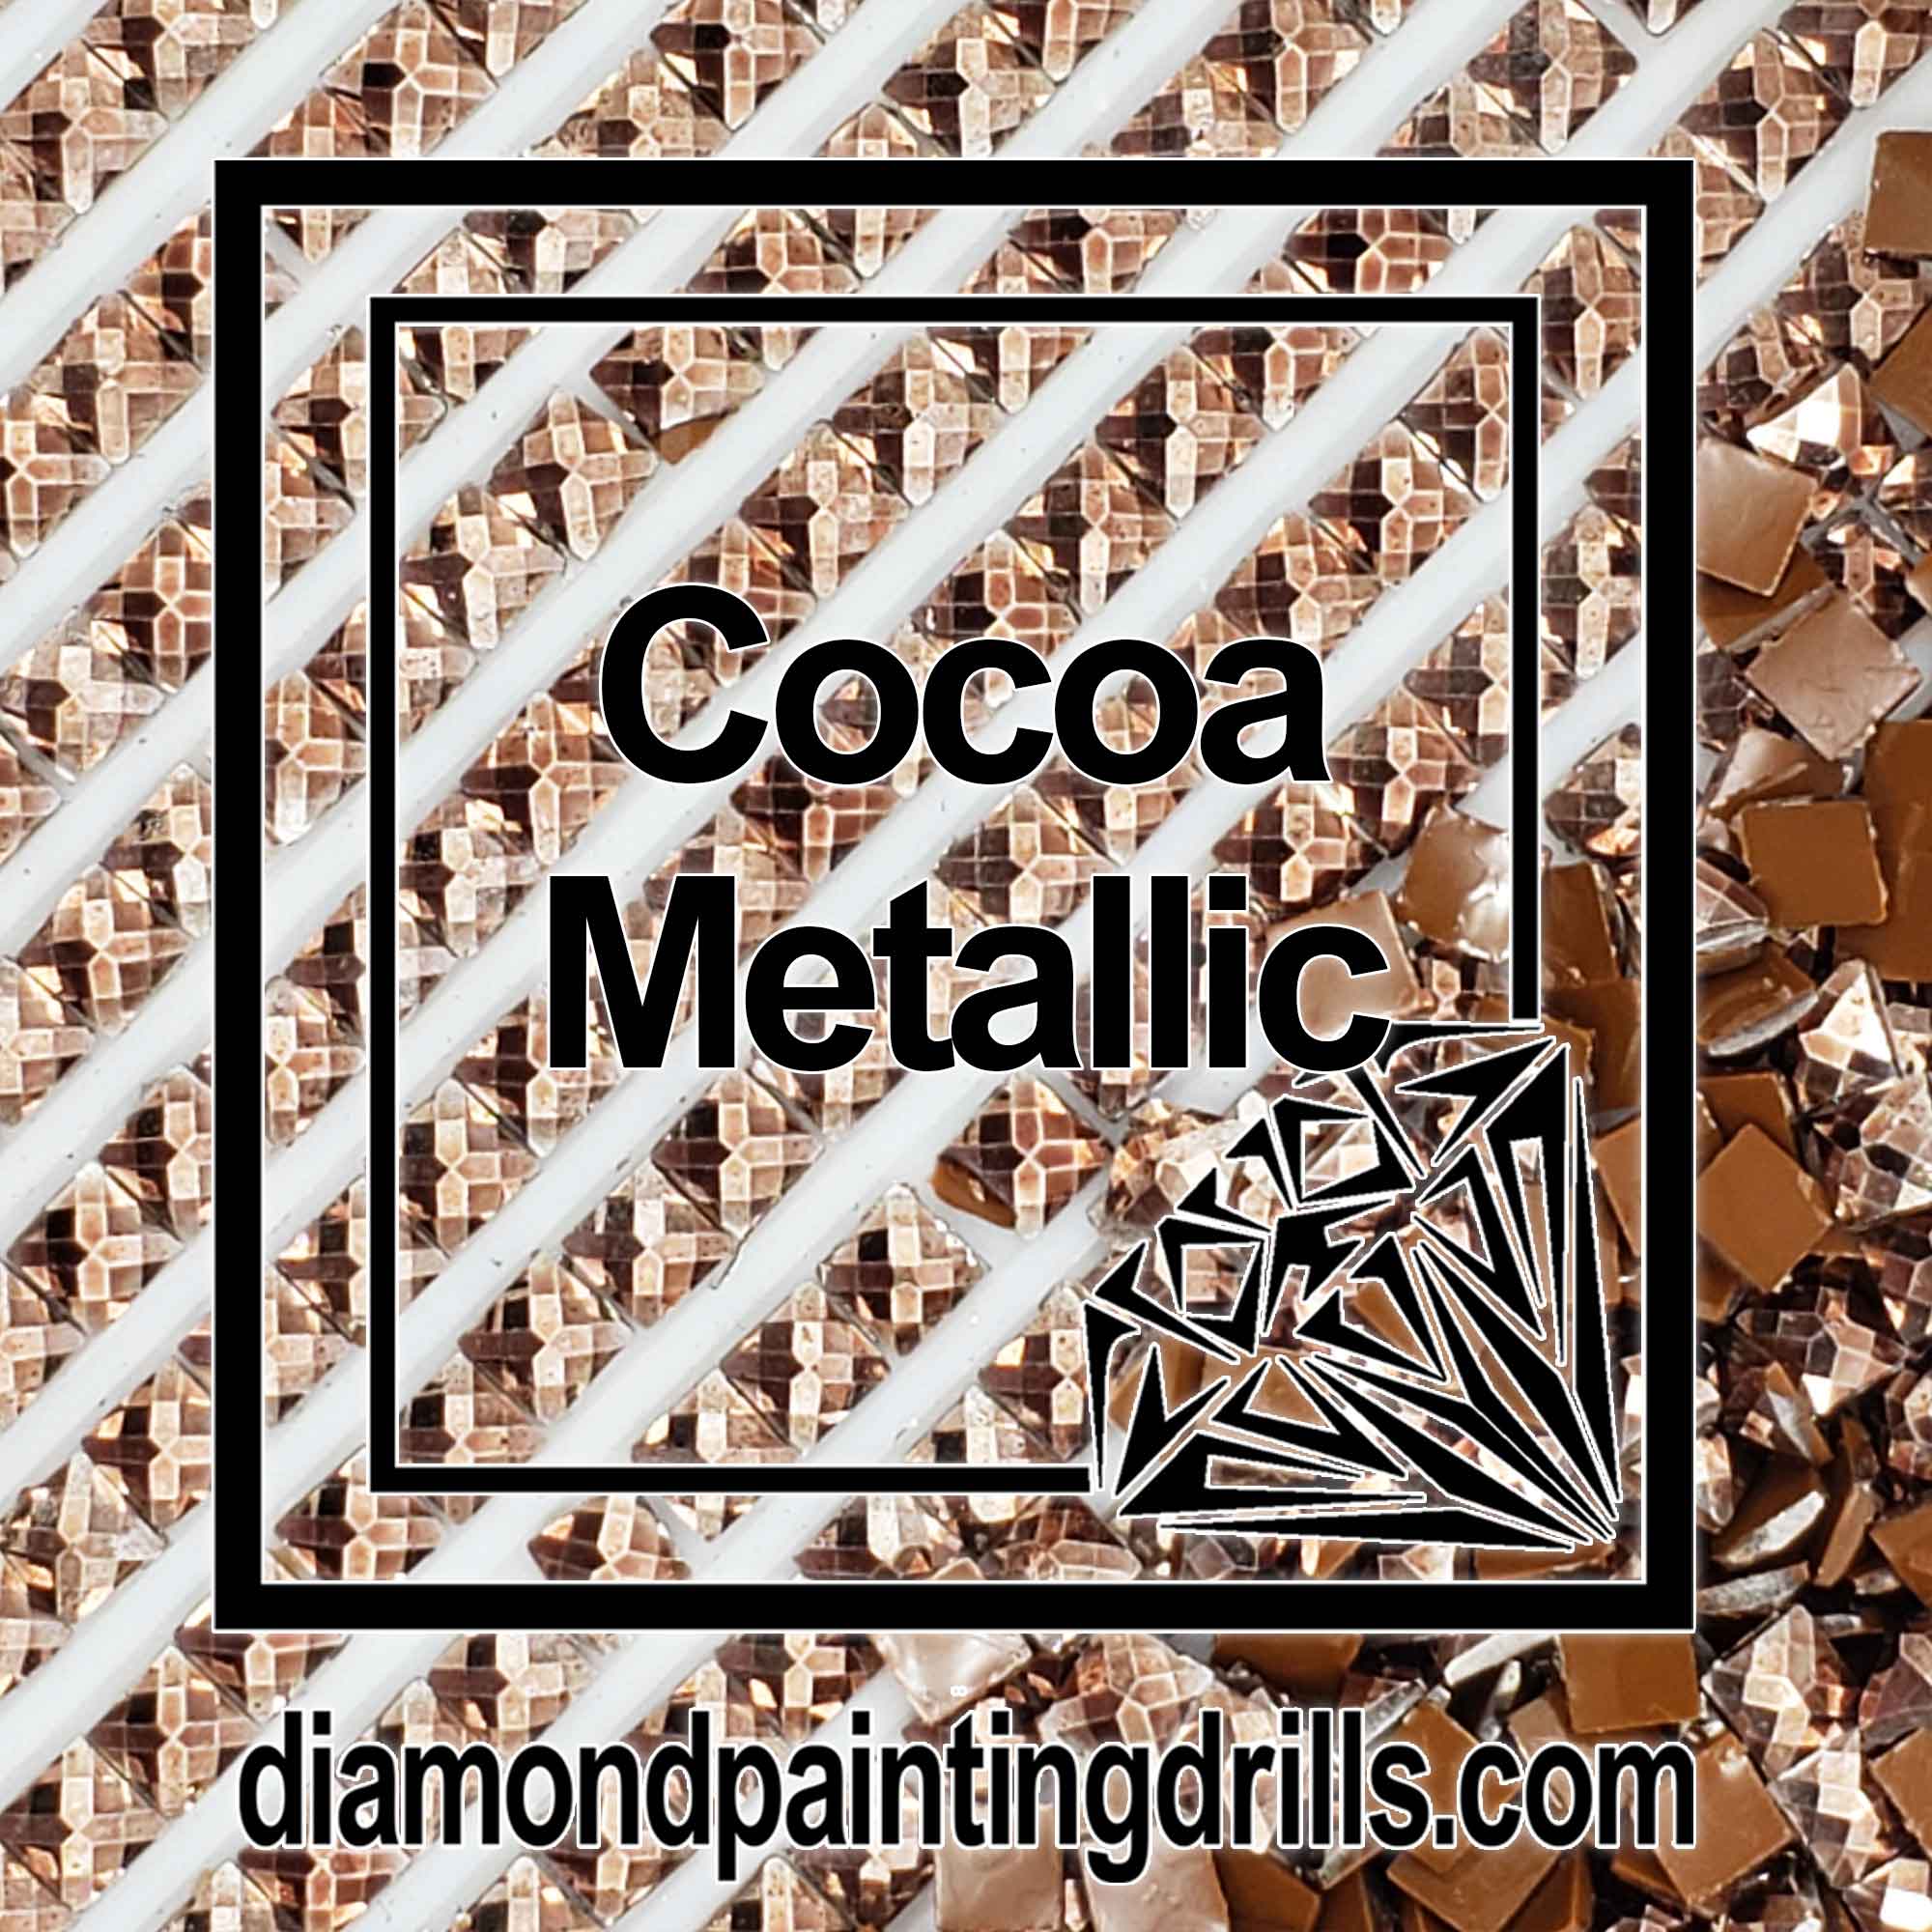 Cocoa Metallic Drills - Square - Diamond Painting Drills